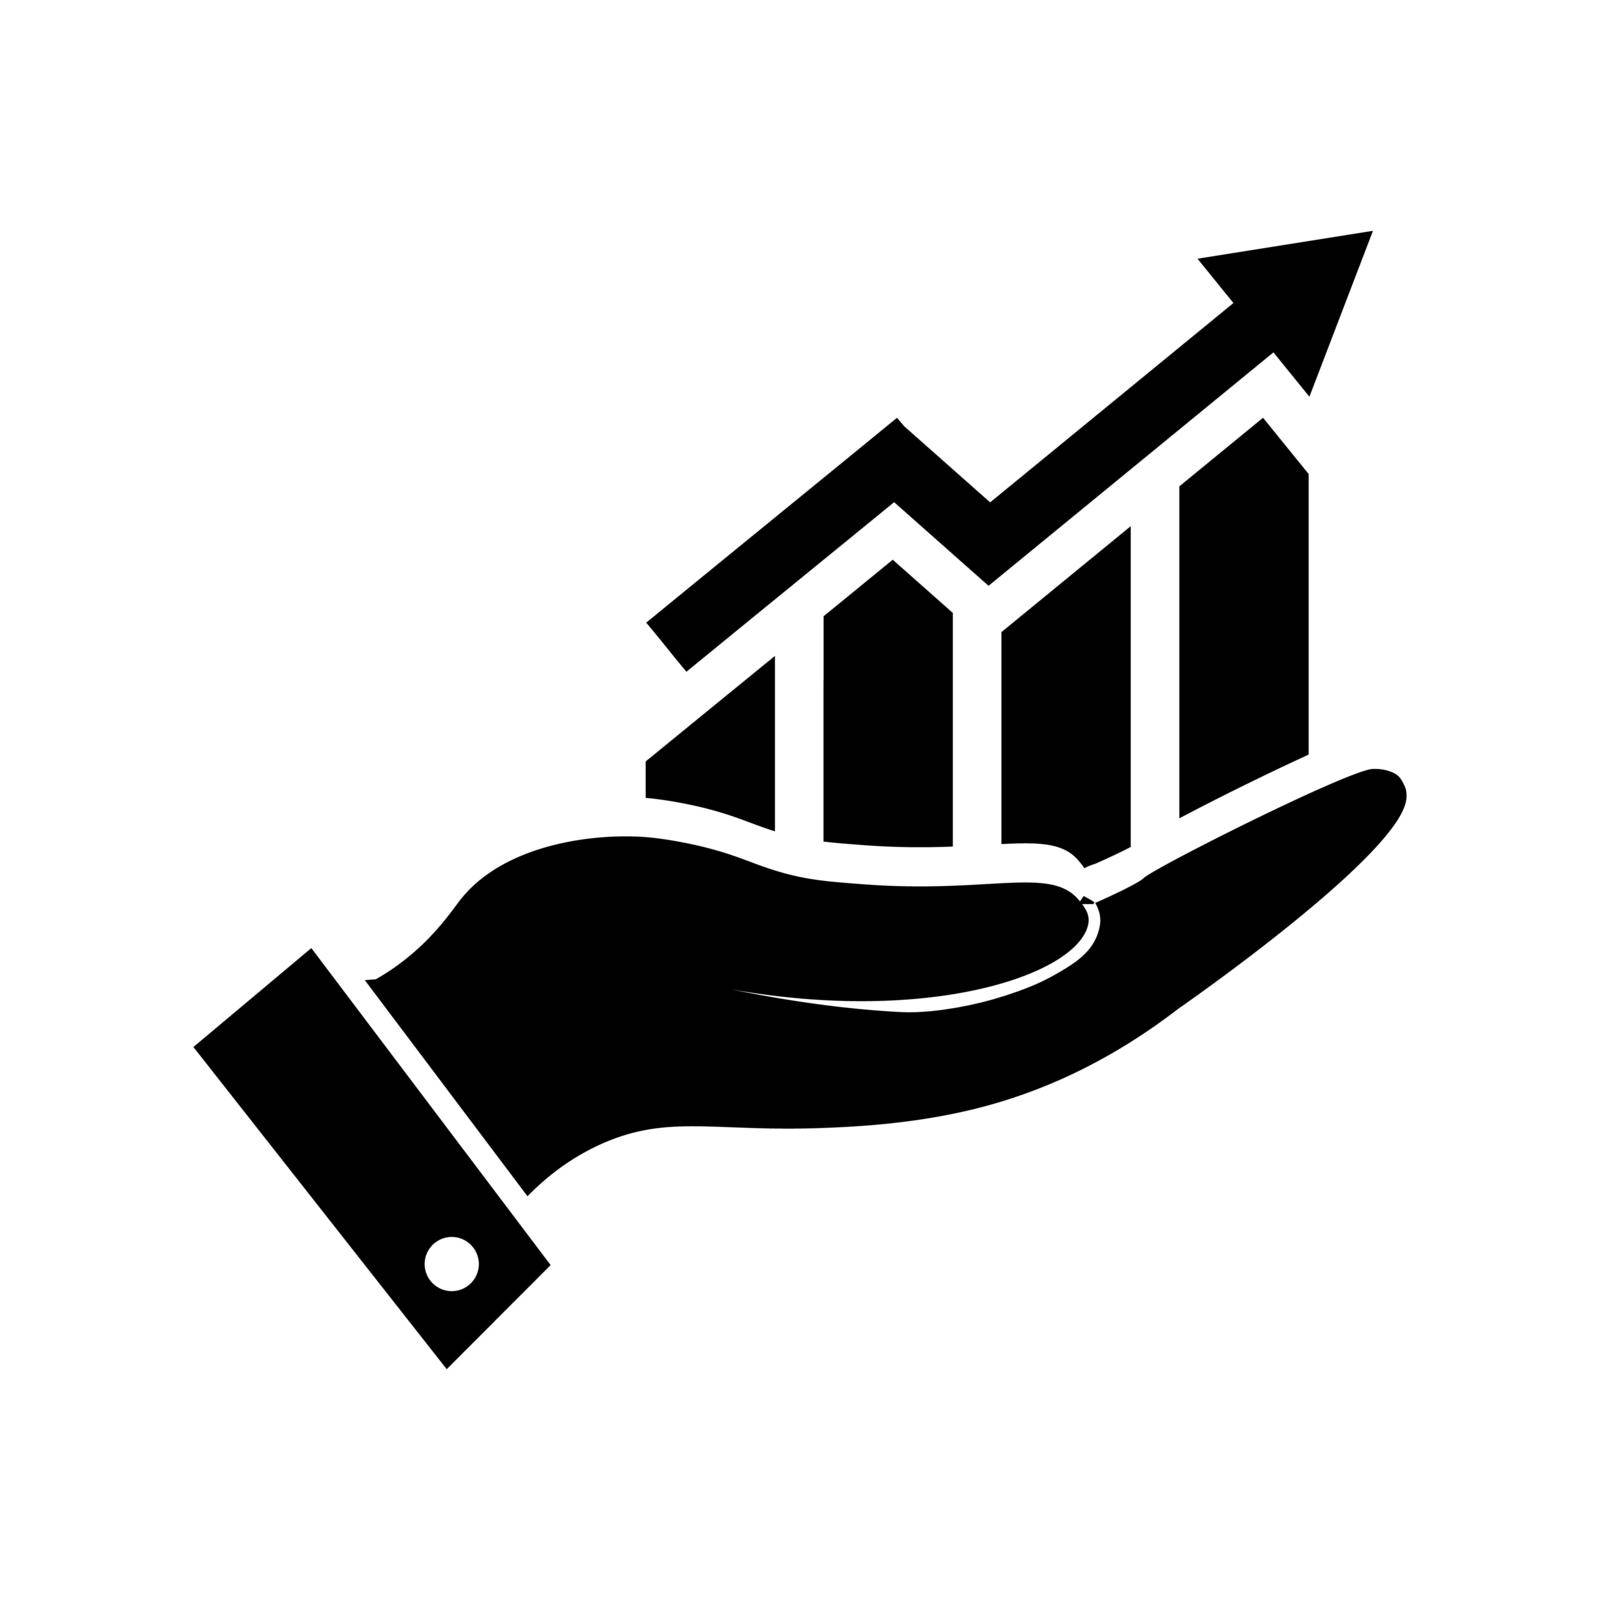 Market forecast icon in black. Growth symbol. by veronawinner